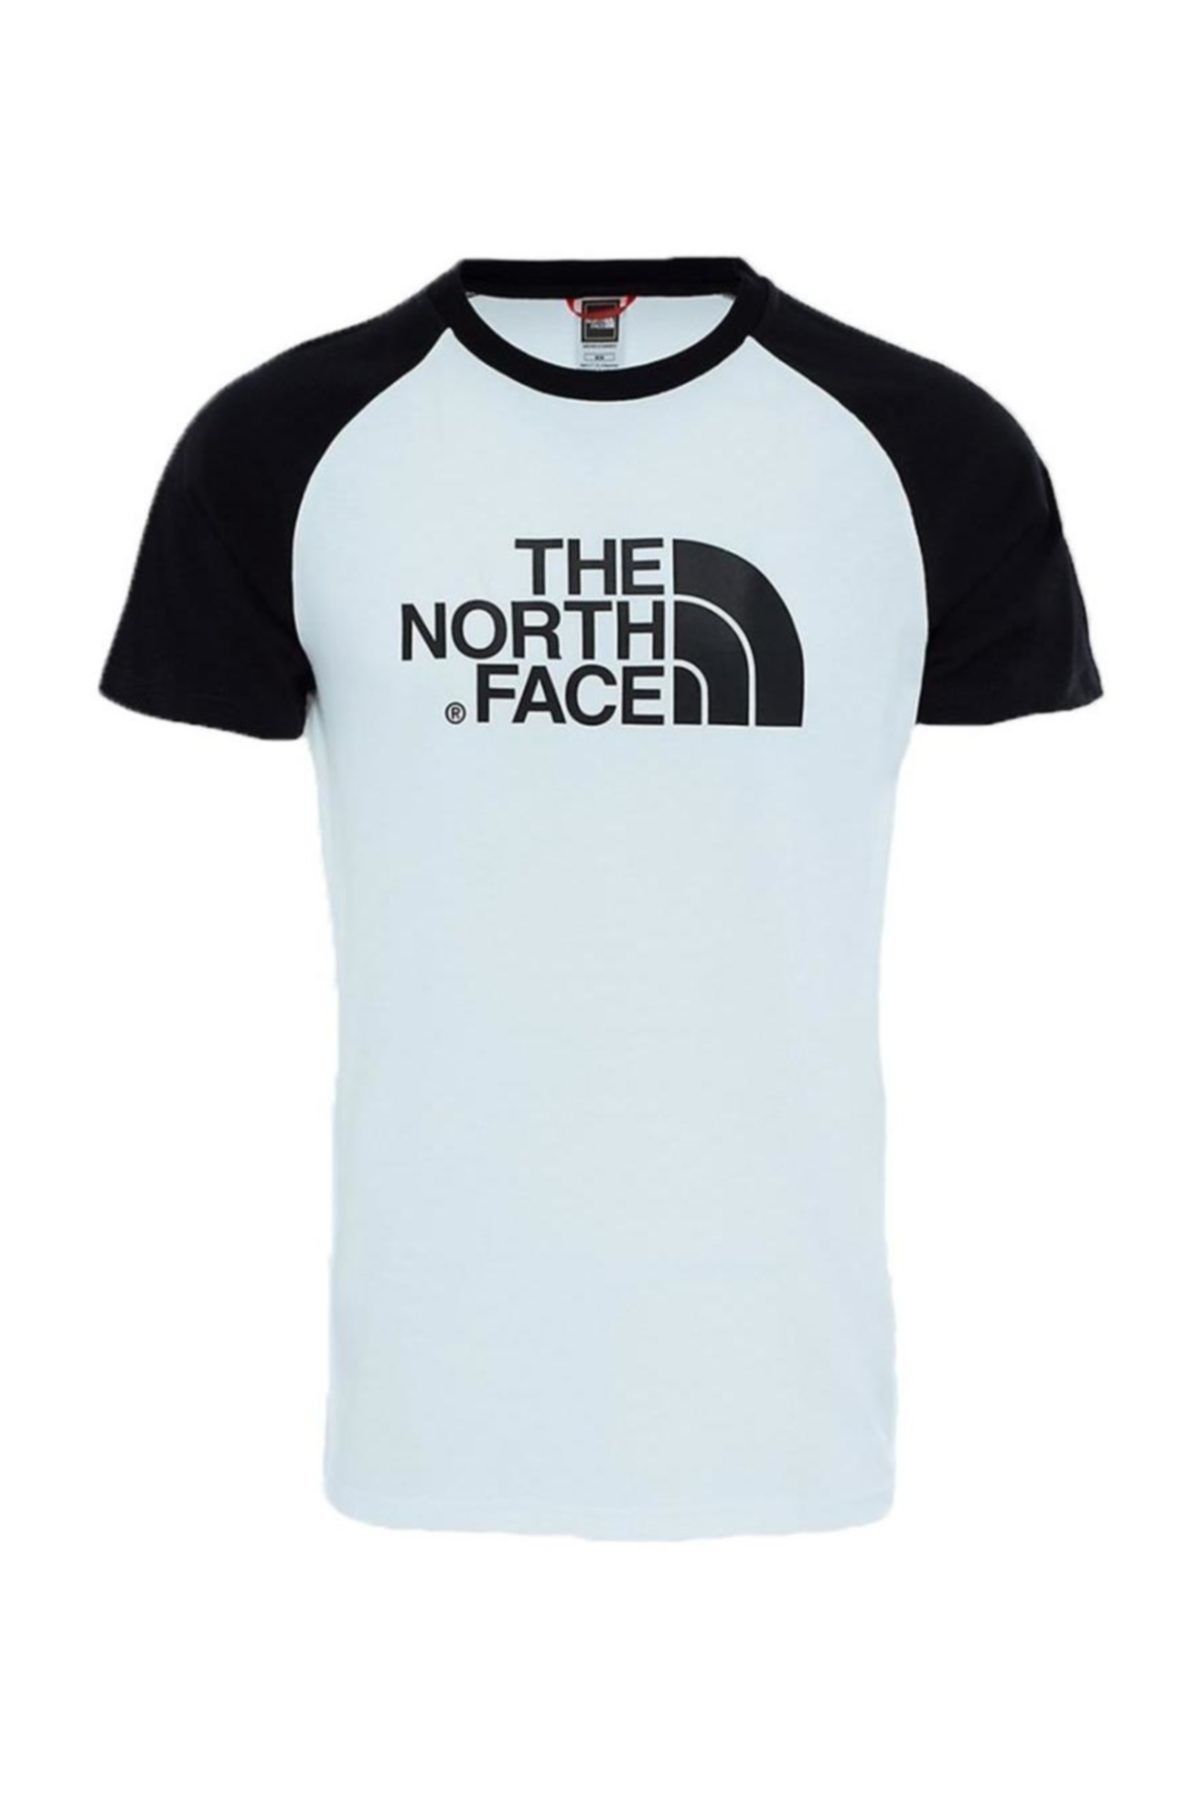 The North Face Raglan Easy Erkek T-shirt Siyah/Beyaz